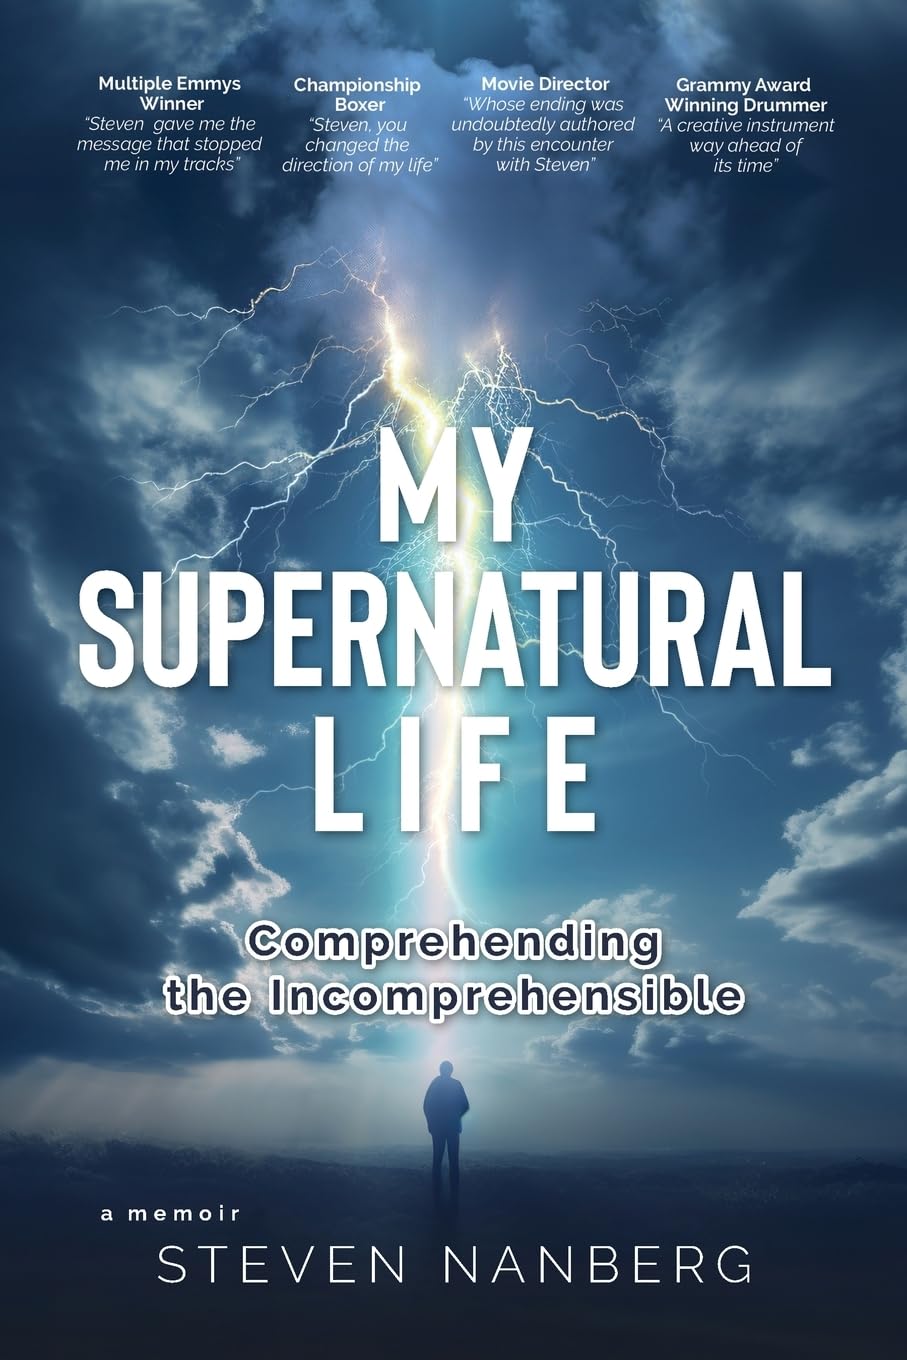 Steven Nanberg Releases New Memoir - My Supernatural Life: Comprehending the Incomprehensible